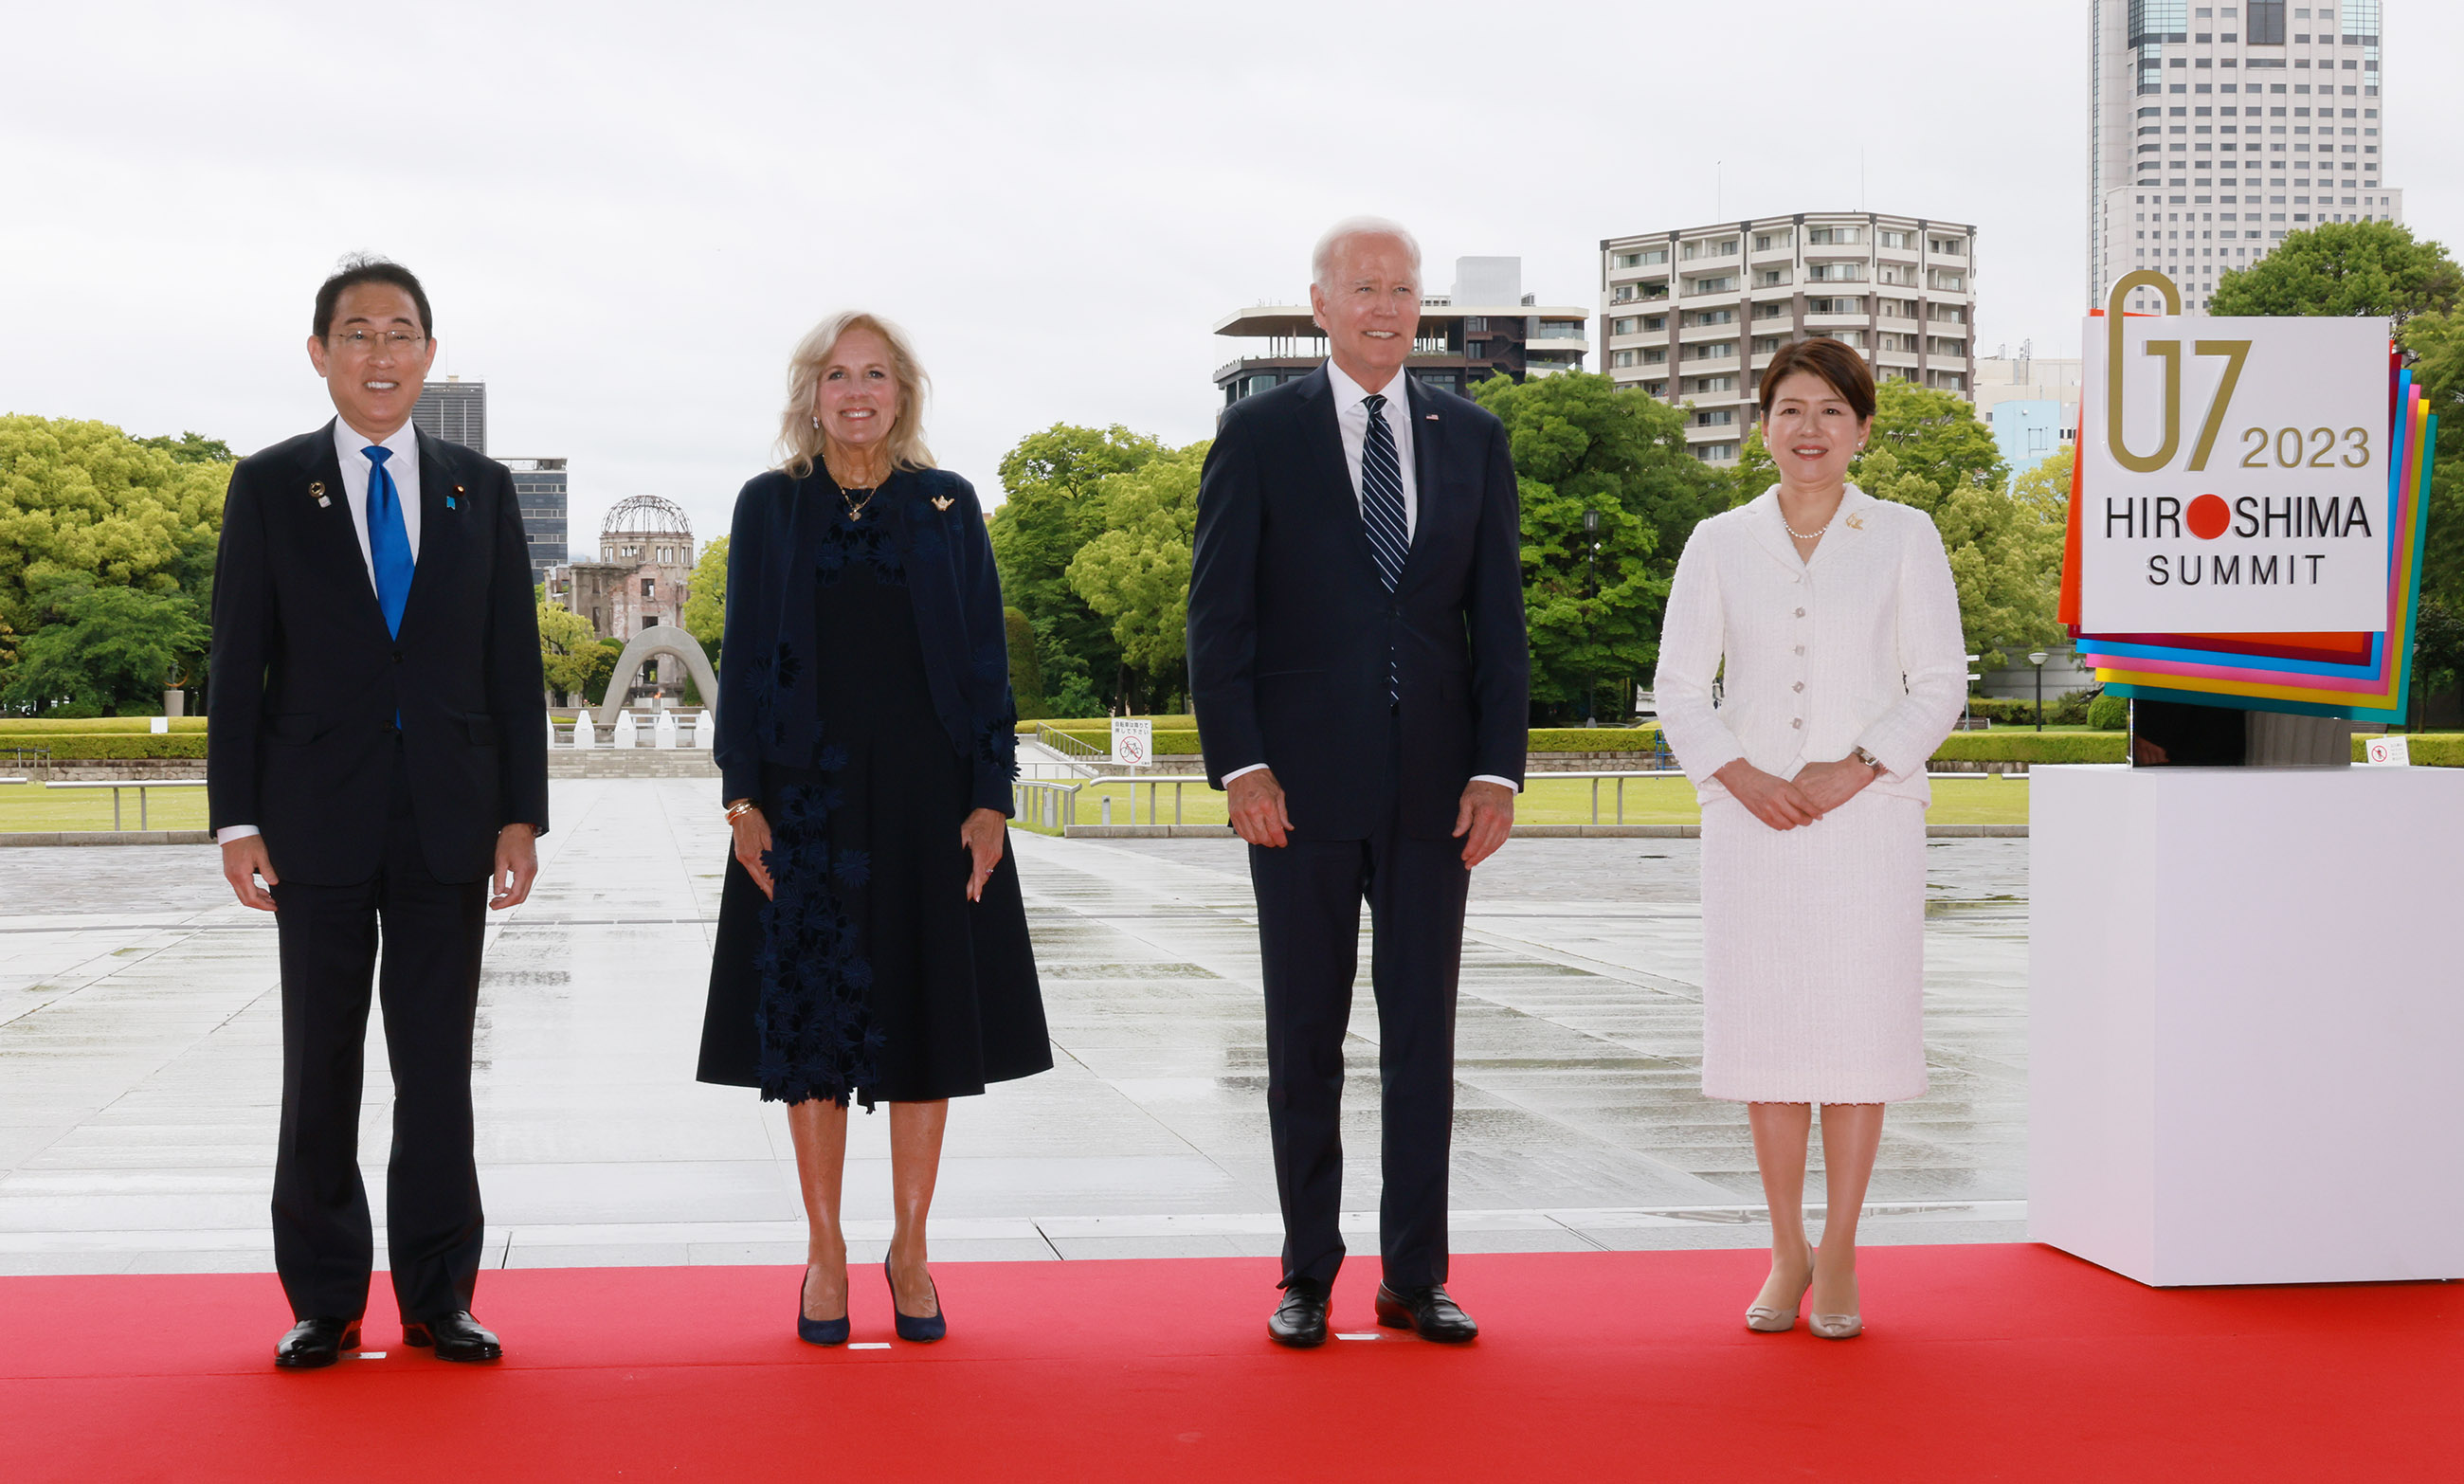 Prime Minister Kishida greeting the U.S. President Joe Biden and the First Lady